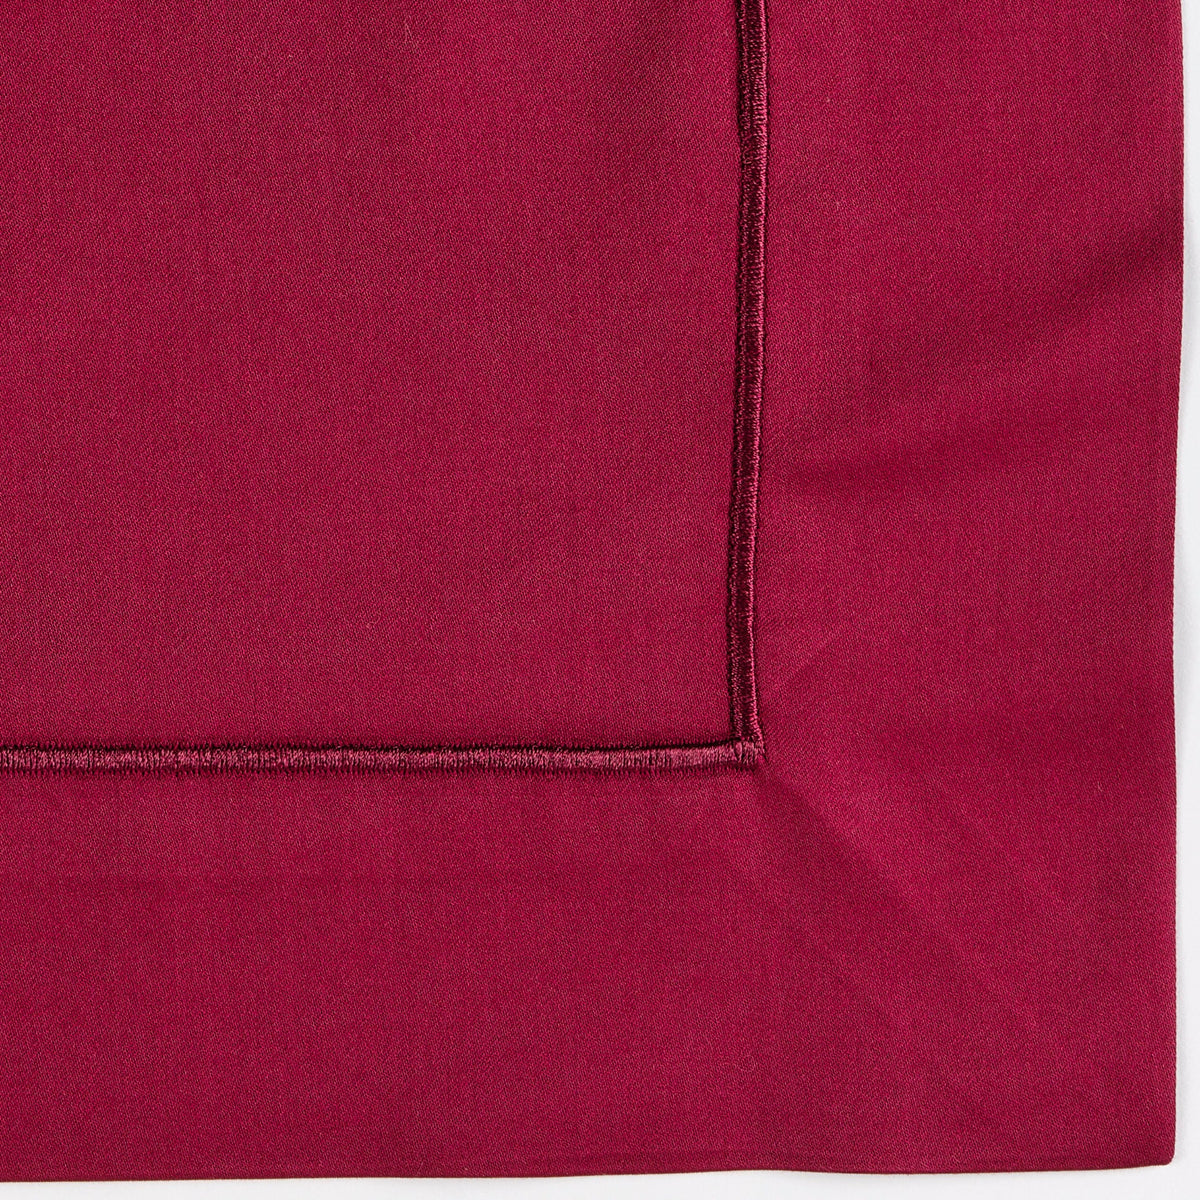 Fabric Closeup of Celso de Lemos Secret Bedding in Rubis Color